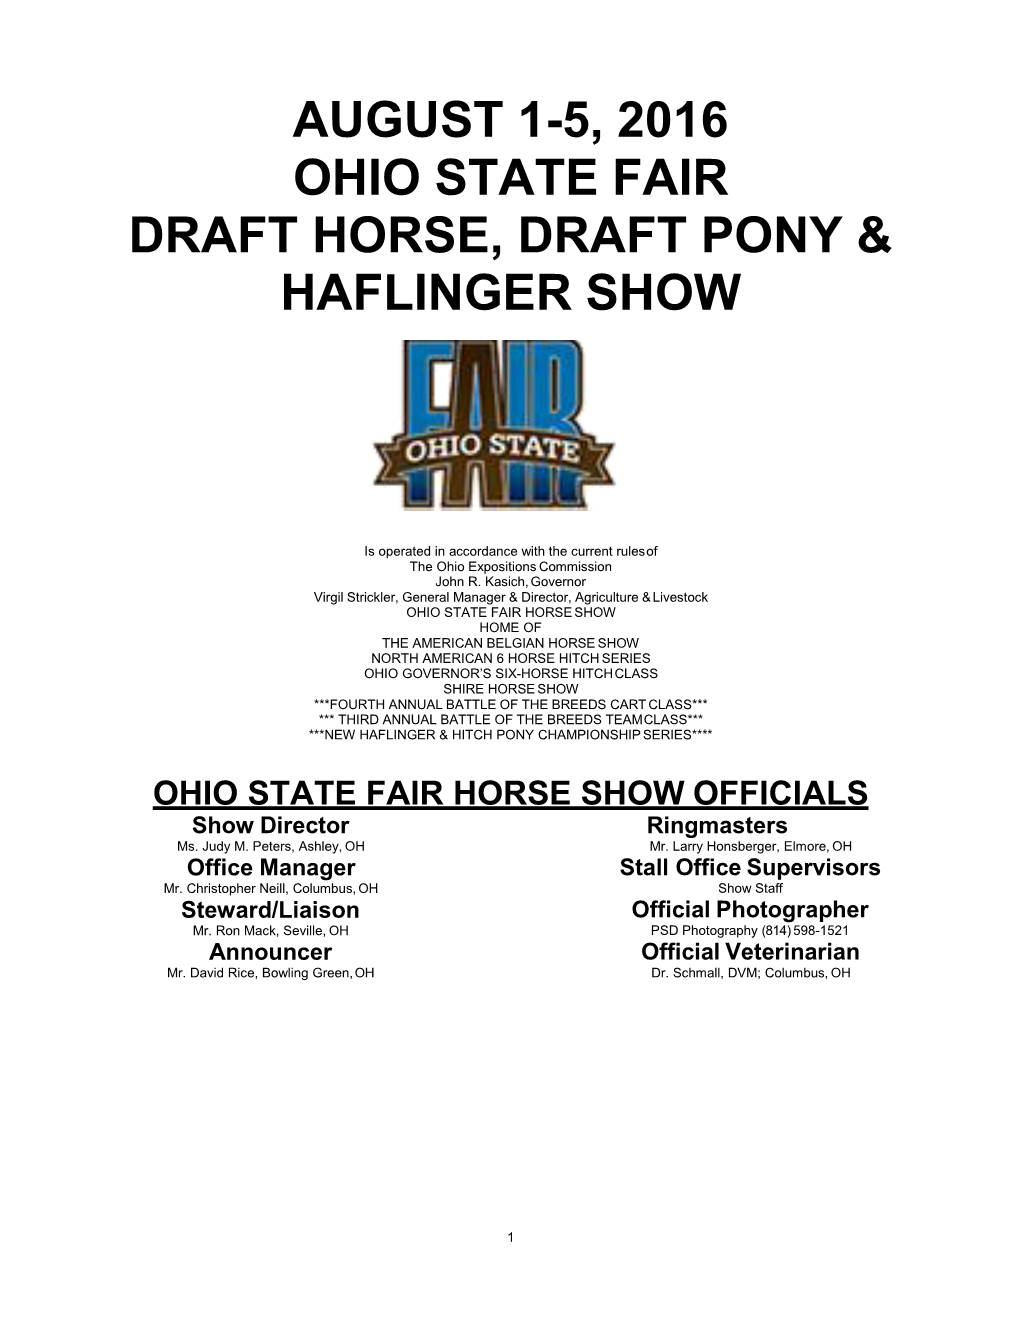 August 1-5, 2016 Ohio State Fair Draft Horse, Draft Pony & Haflinger Show